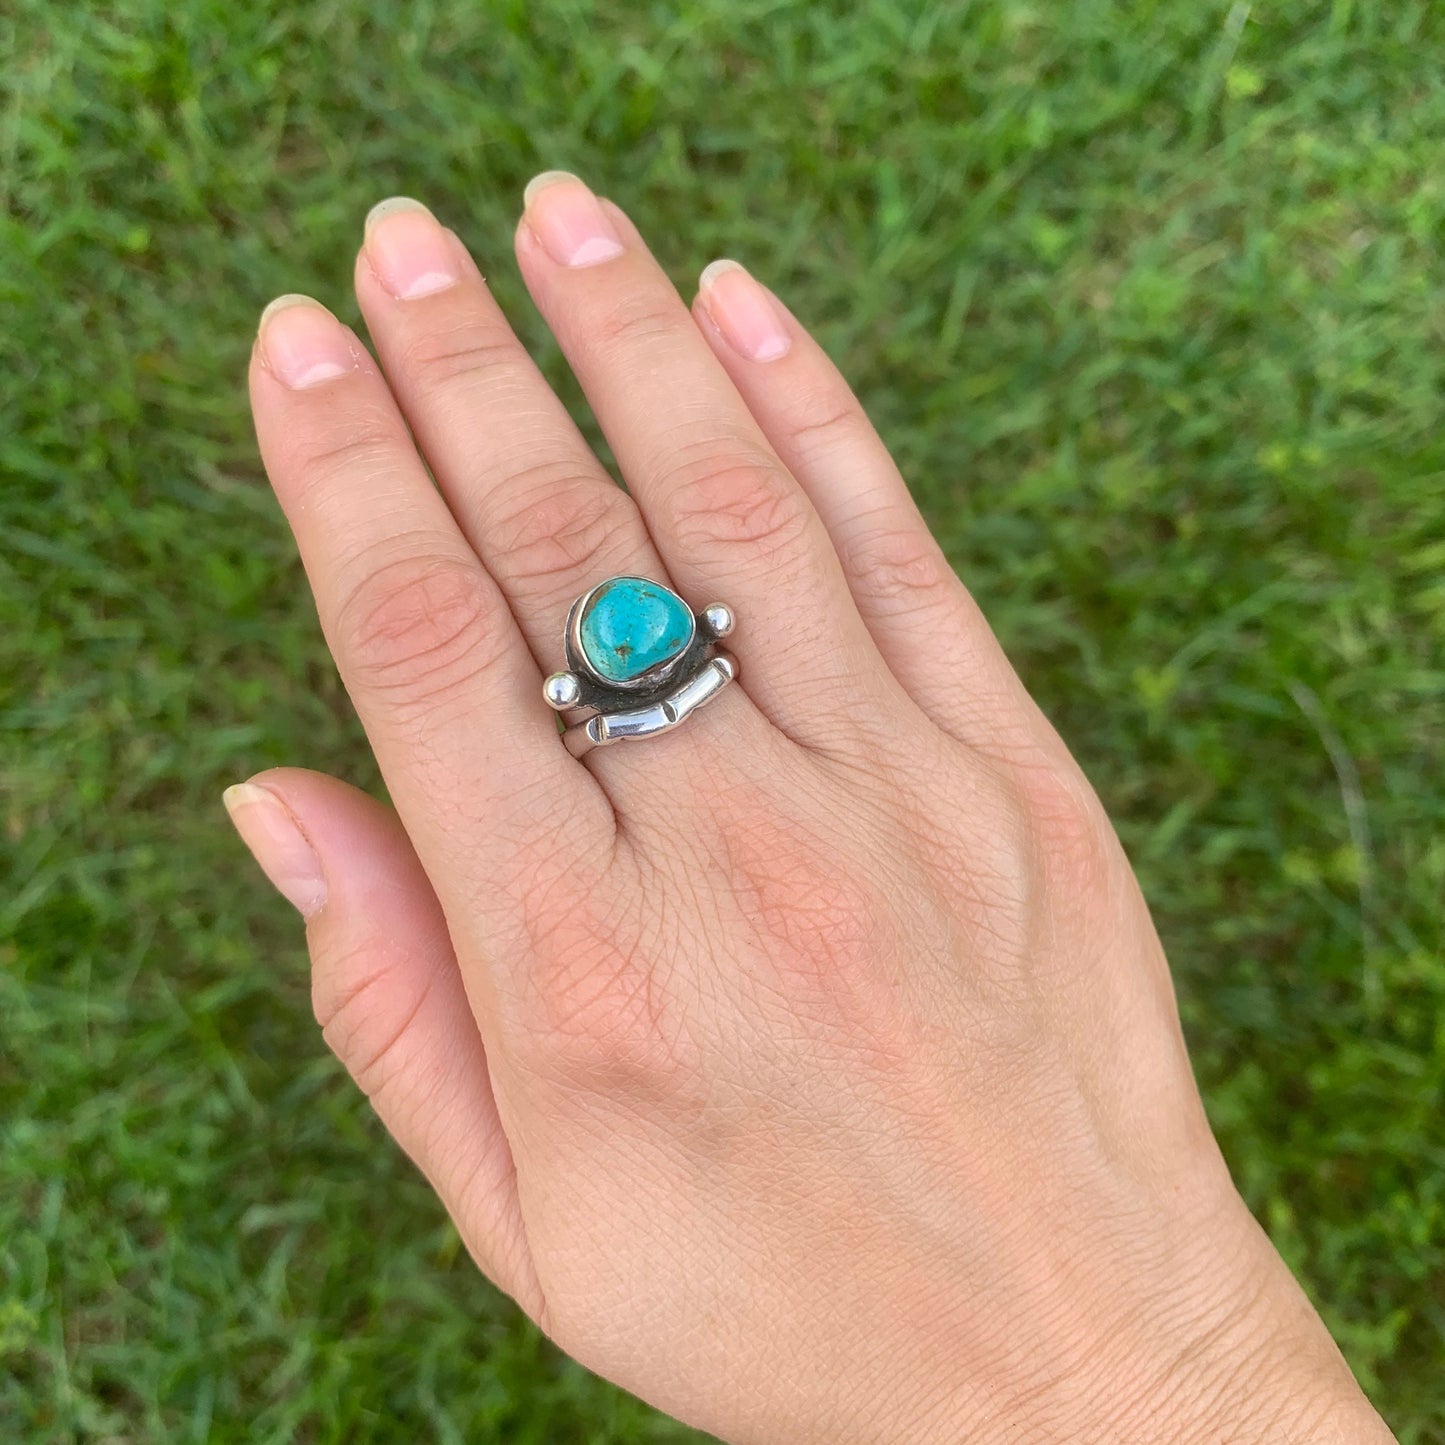 Vintage Silver Turquoise Ring | Southwest Turquoise Chiseled Ring | Size 7.5 Ring